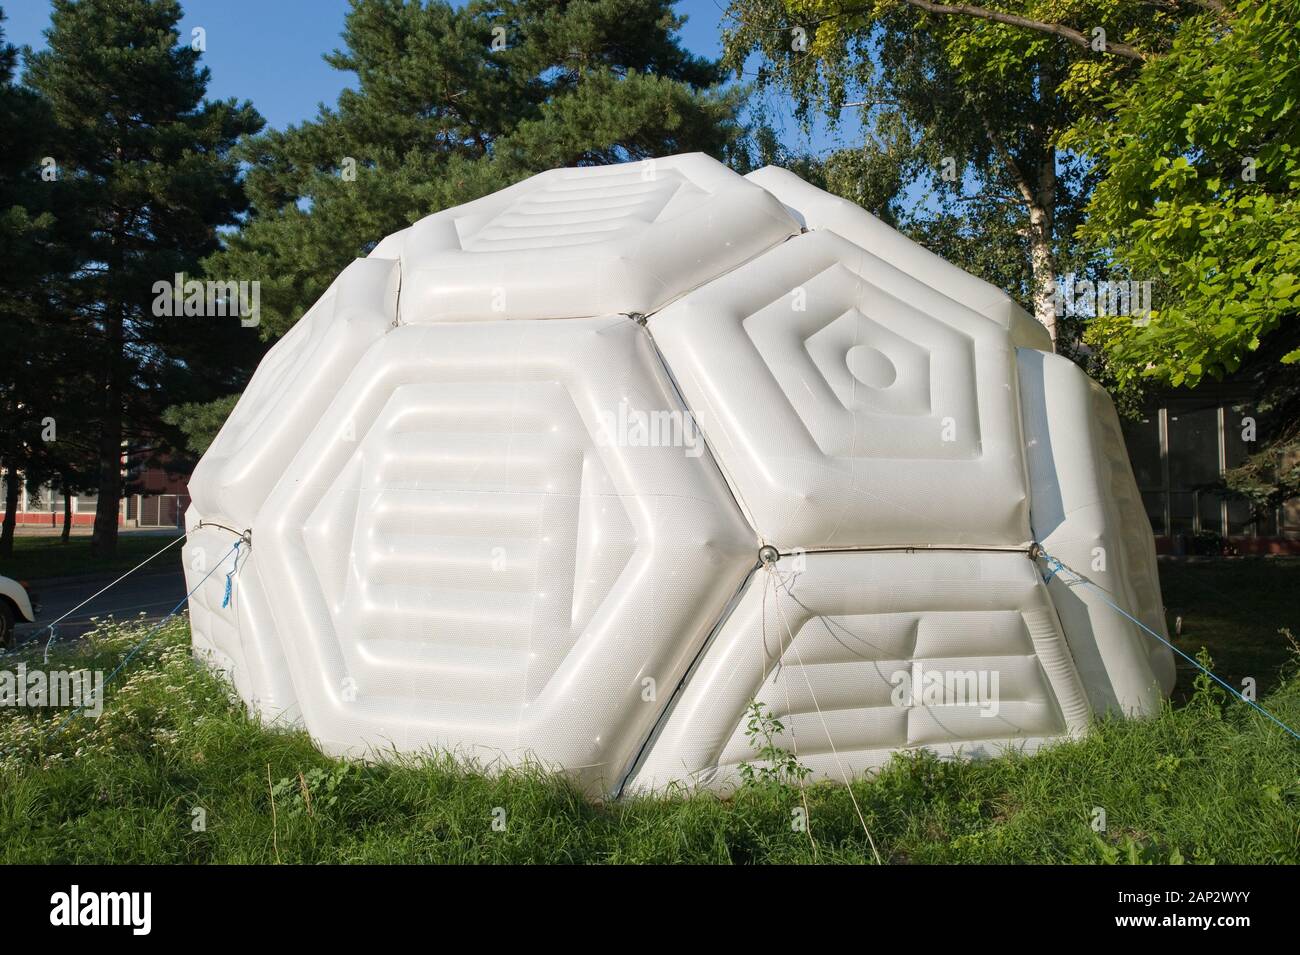 Aufblasbares Zelt - Inflatable Tent Stock Photo - Alamy